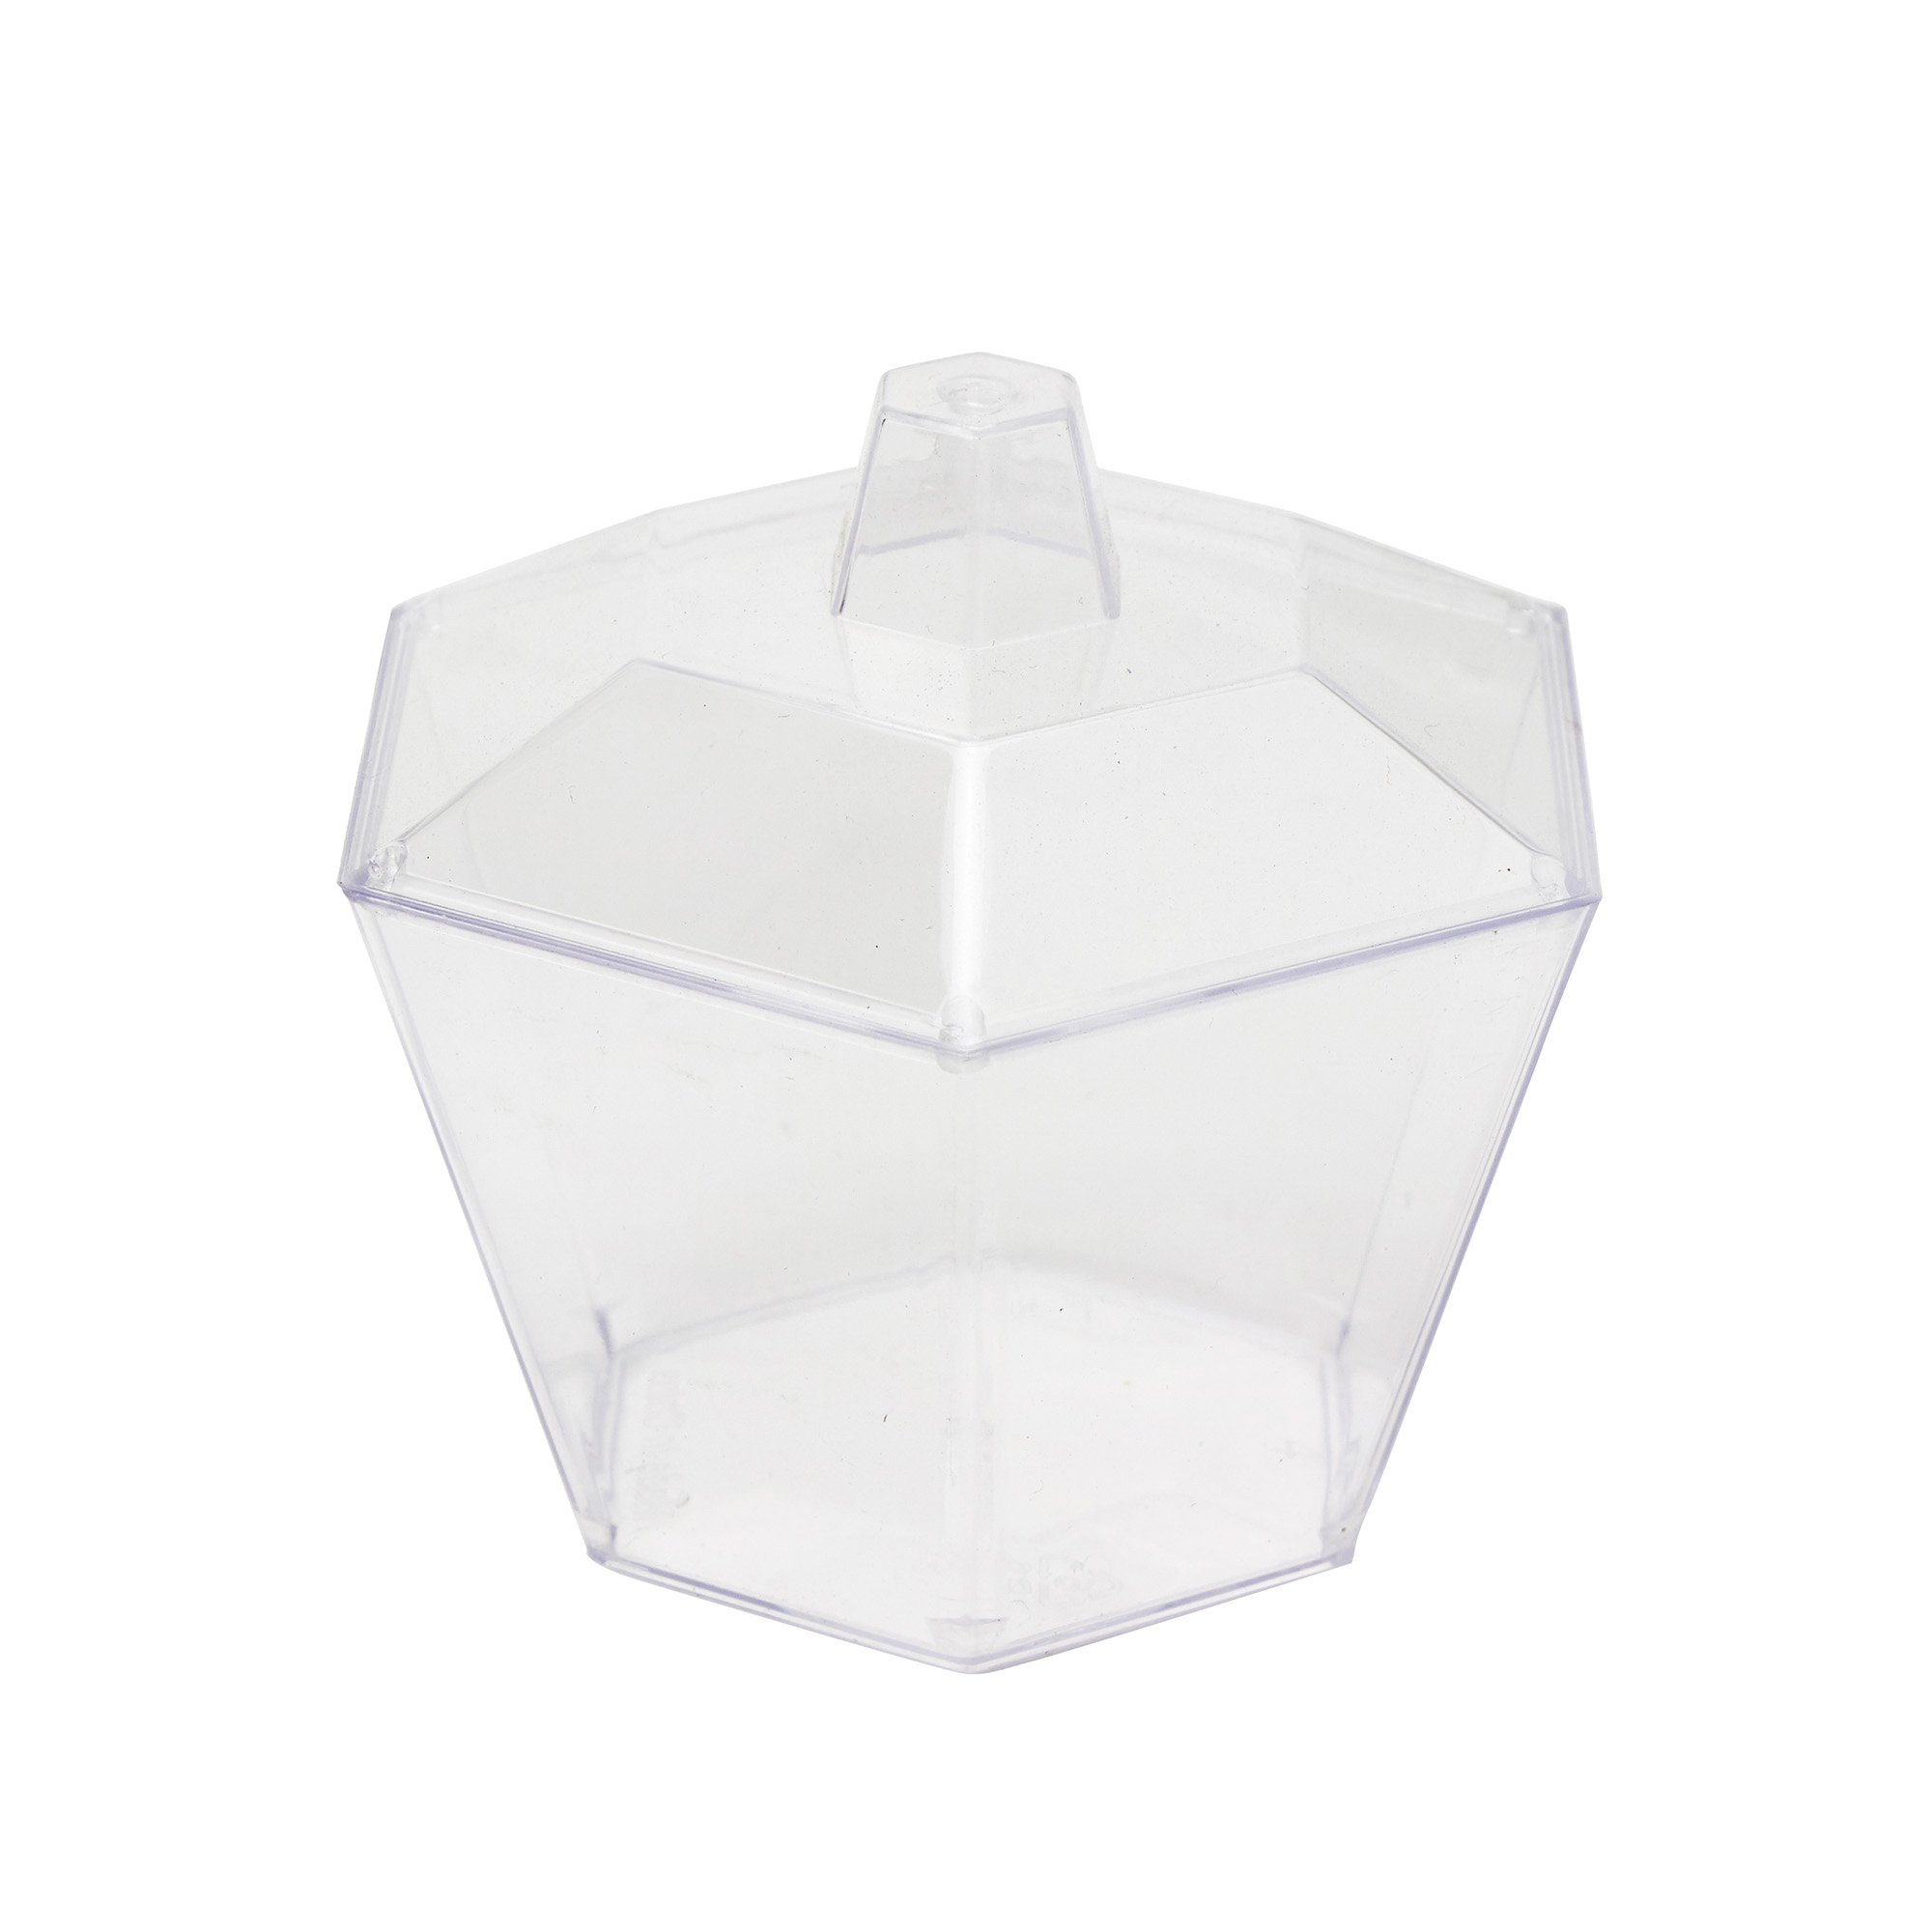 Plastic Hexagon Cup 3oz 12pc/box - Clear